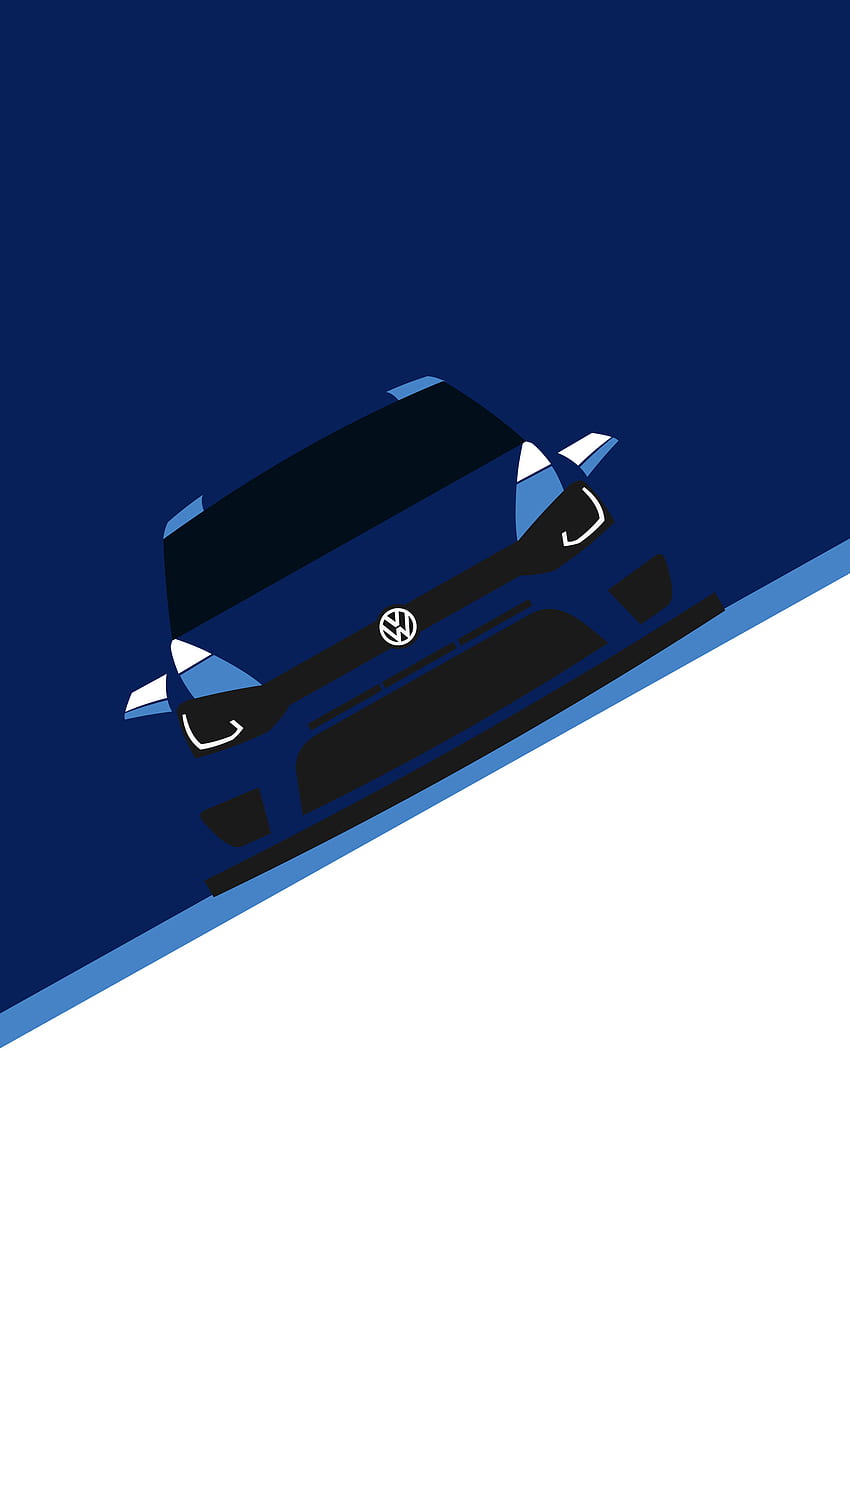 Set Mobil Baru naik. (Polo, Manta, Alpen) hal. telepon sekarang, Volkswagen wallpaper ponsel HD